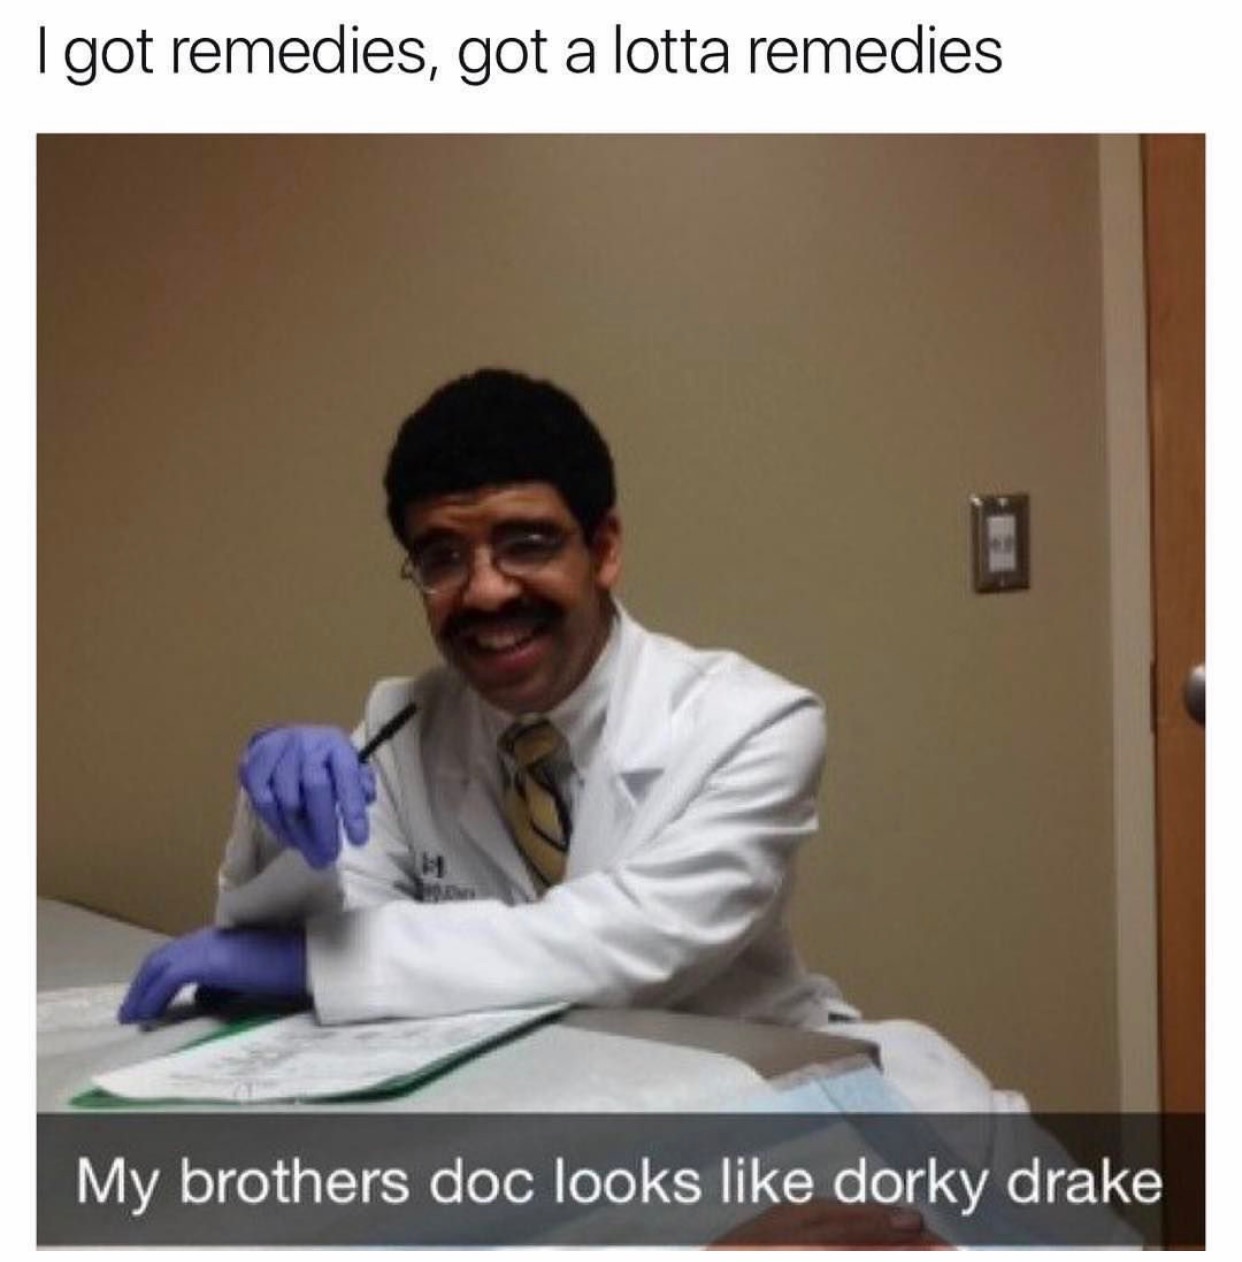 drake doctor - Igot remedies, got a lotta remedies My brothers doc looks dorky drake